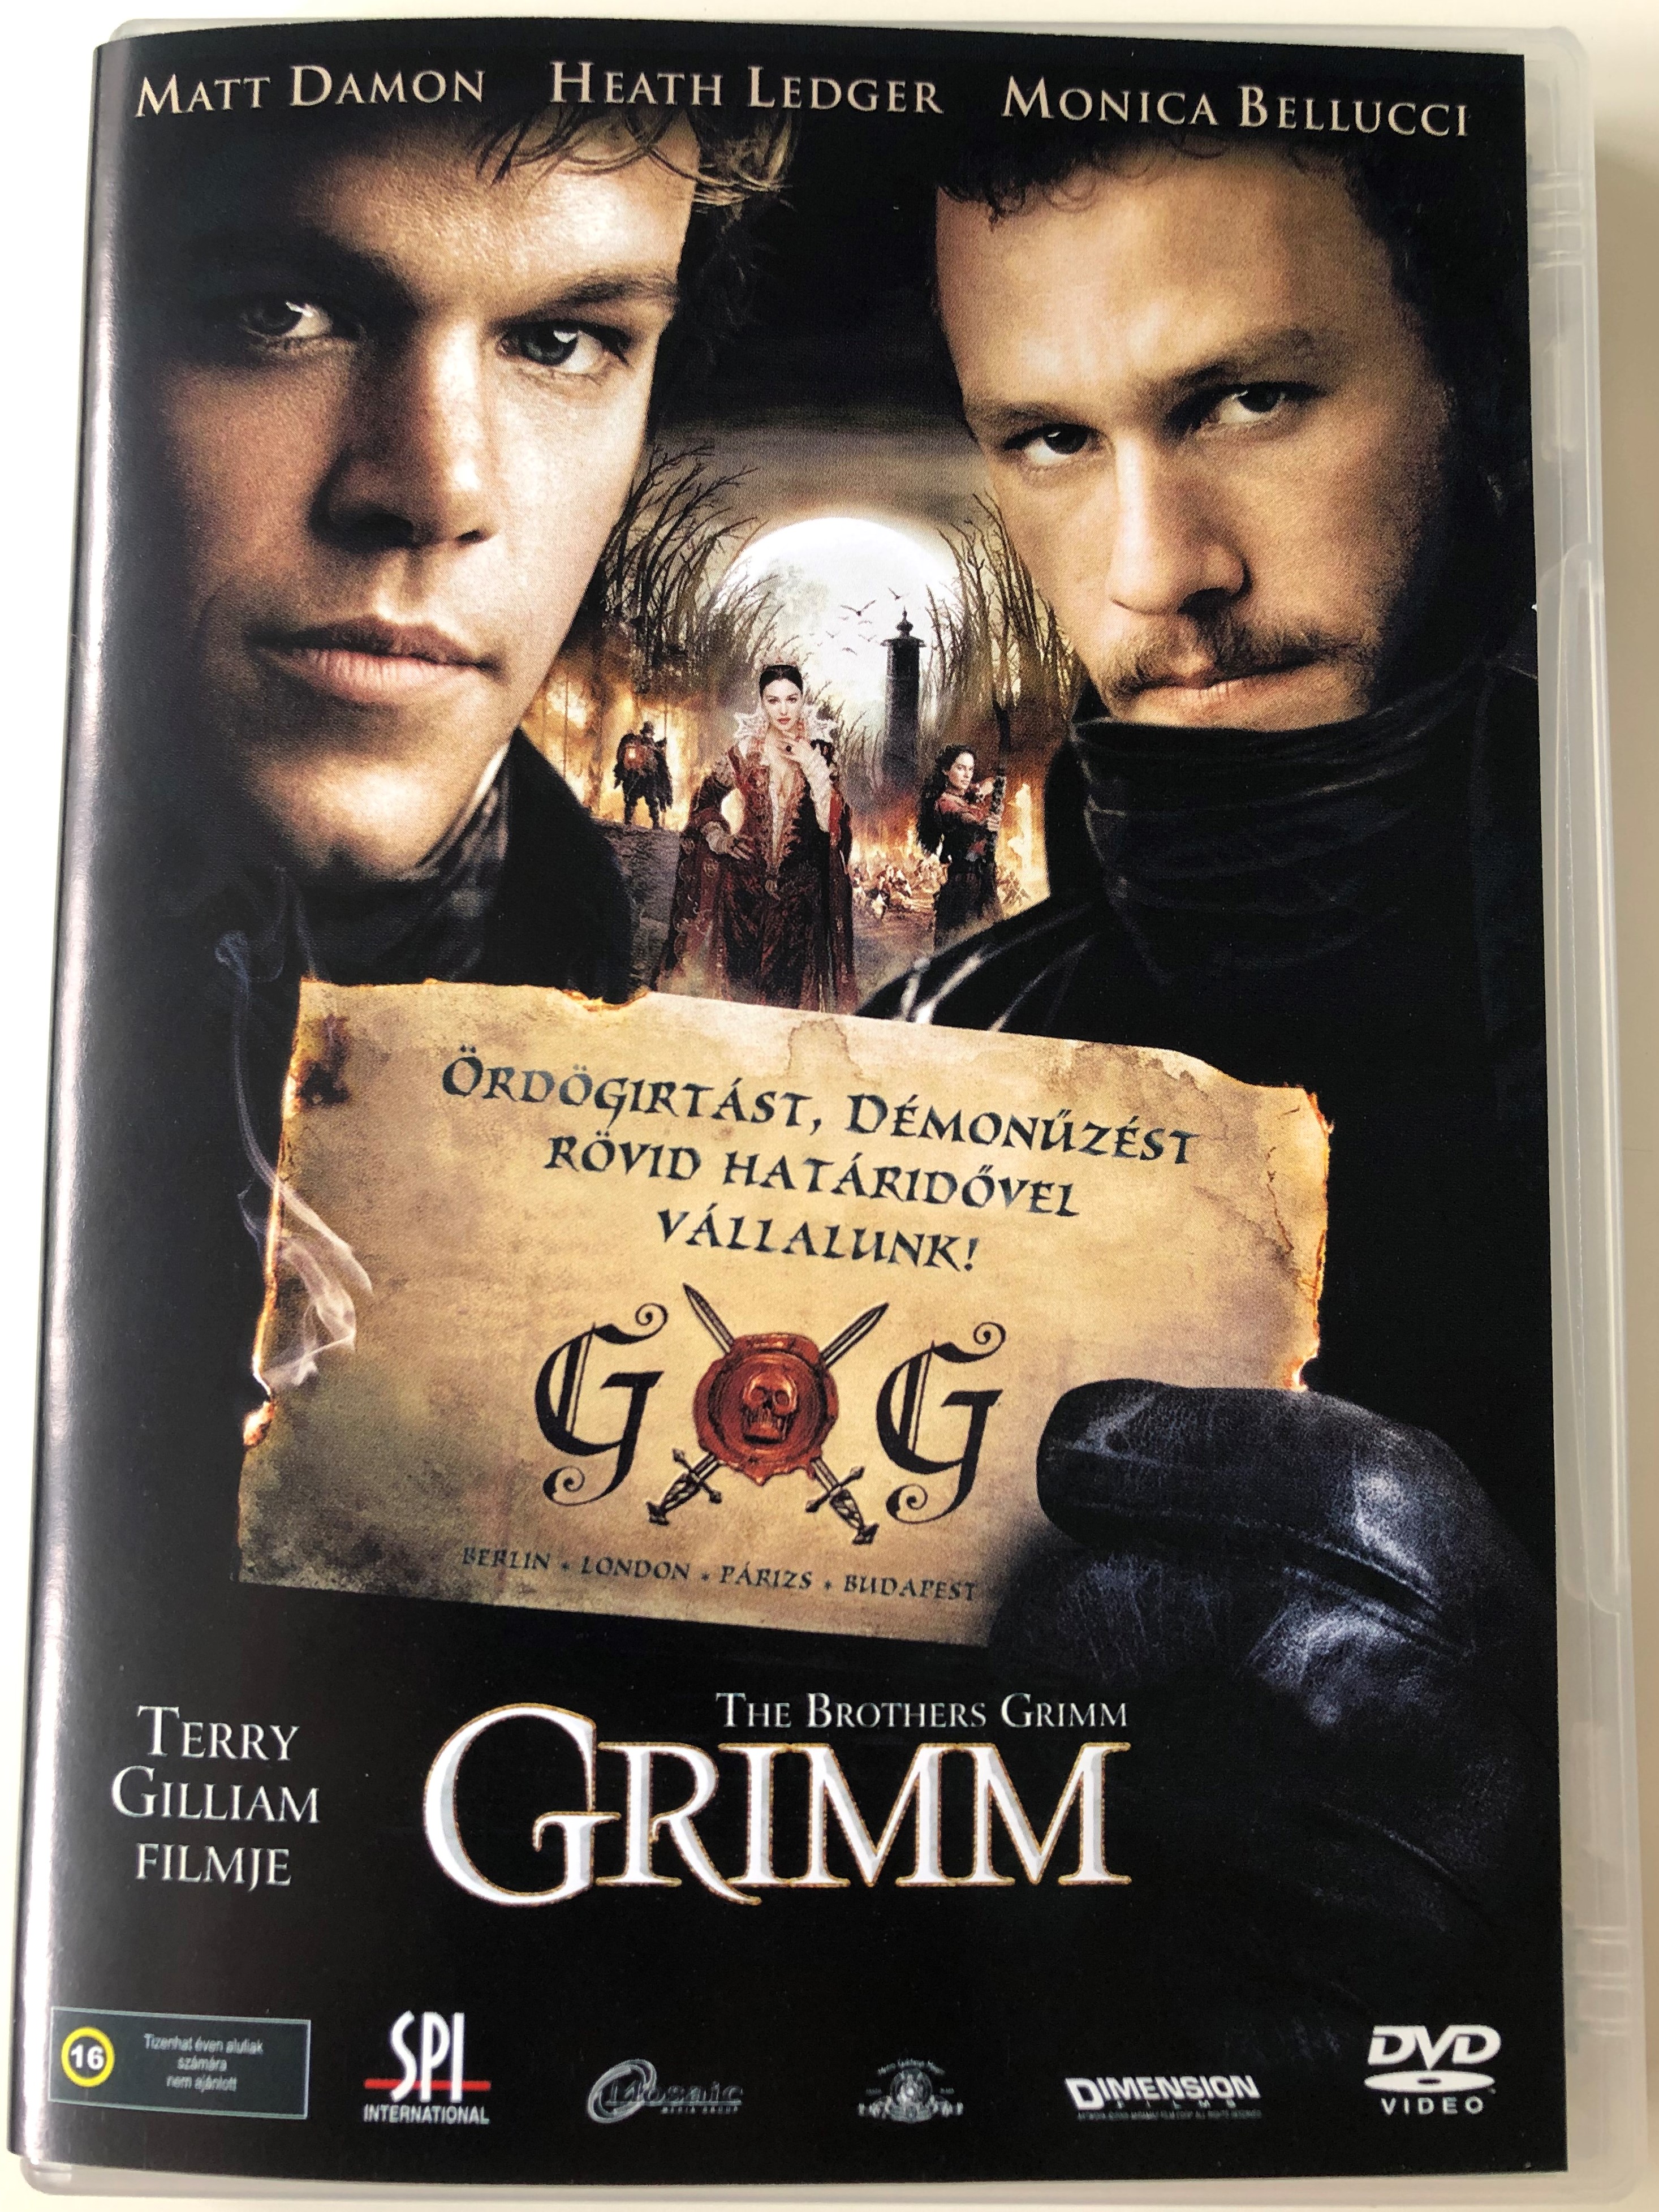 The Brothers Grimm DVD 2005 Grimm / Directed by Terry Gilliam / Starring:  Matt Damon, Heath Ledger, Monica Bellucci - bibleinmylanguage